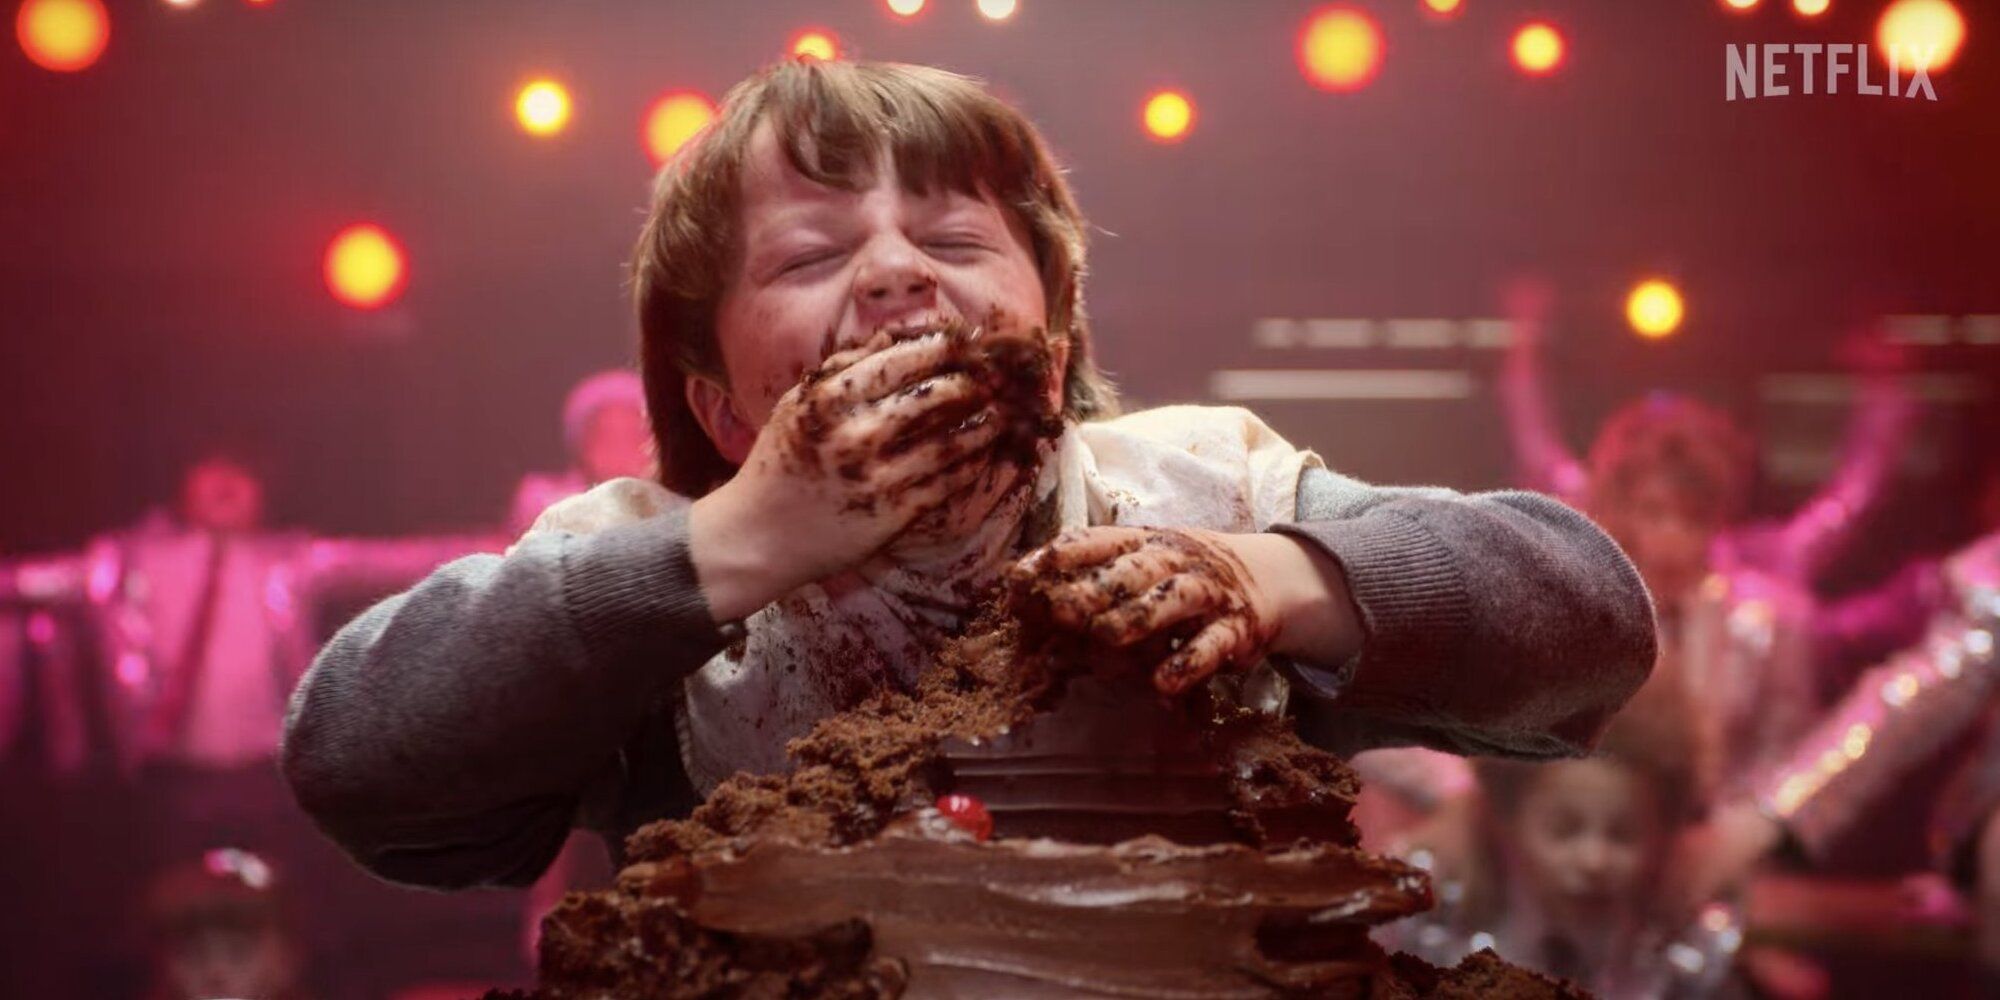 Bruce Eating The Chocolate Cake In Roald Dahl's Matilda The Musical.jpg